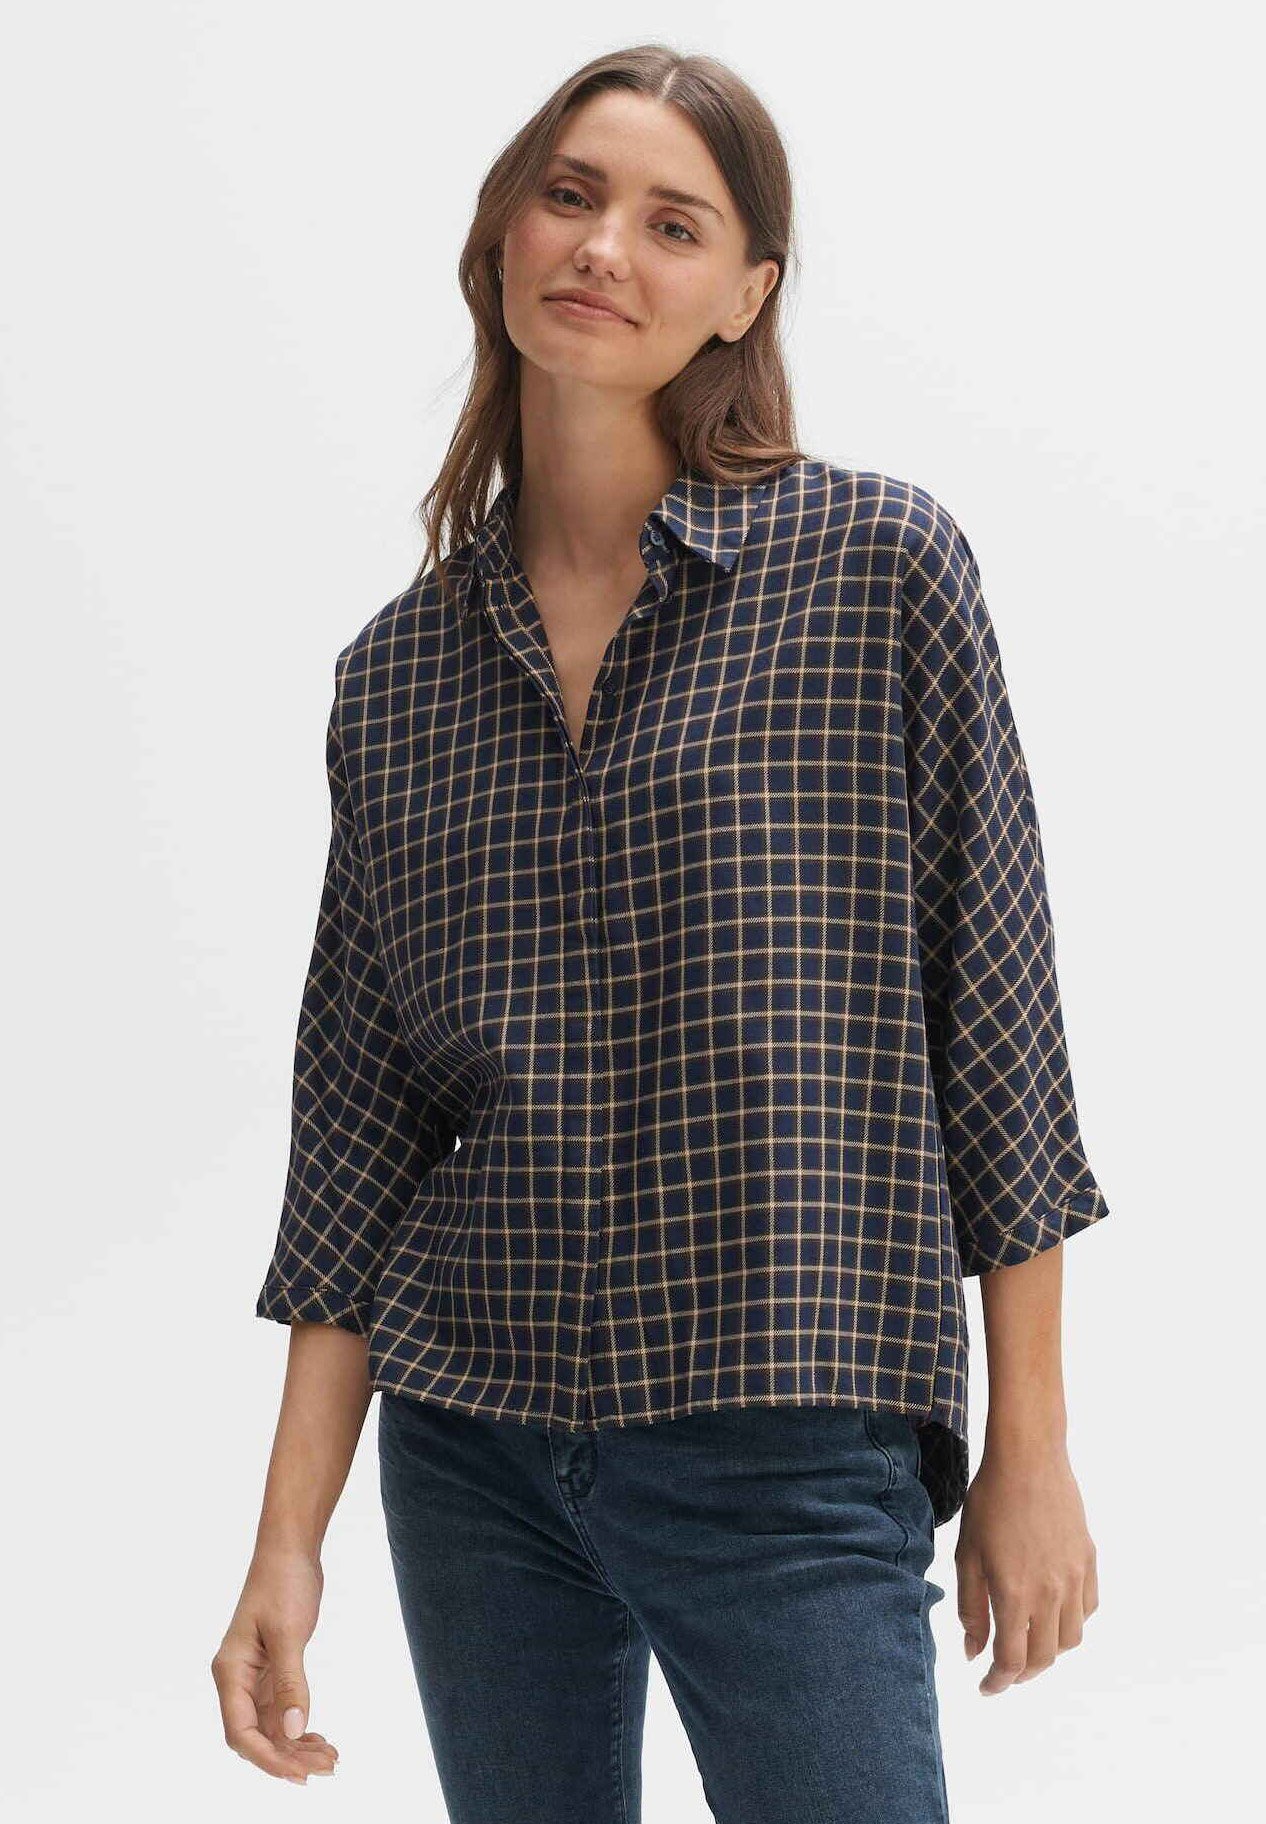 anna tunstill add photo college down blouse